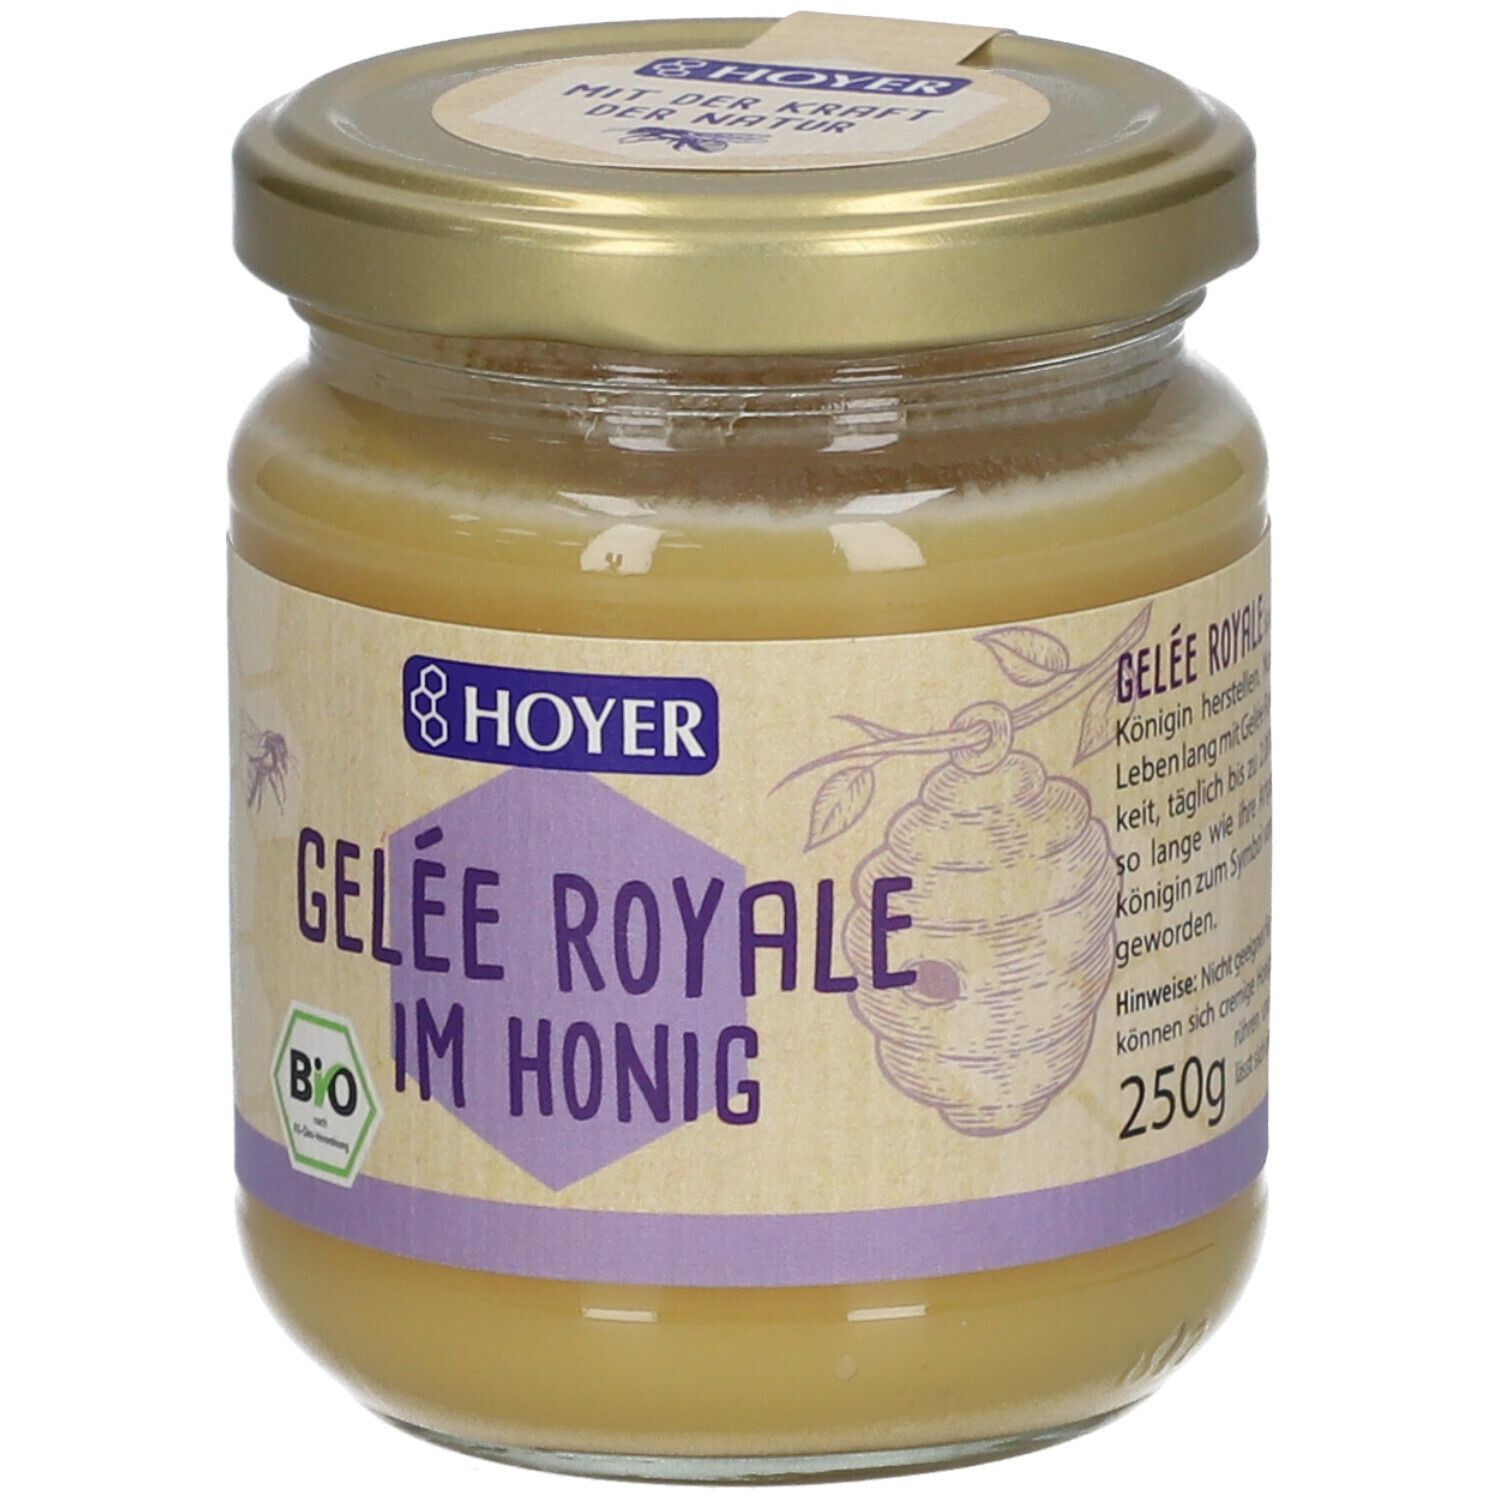 HOYER Gelee Royale im Honig